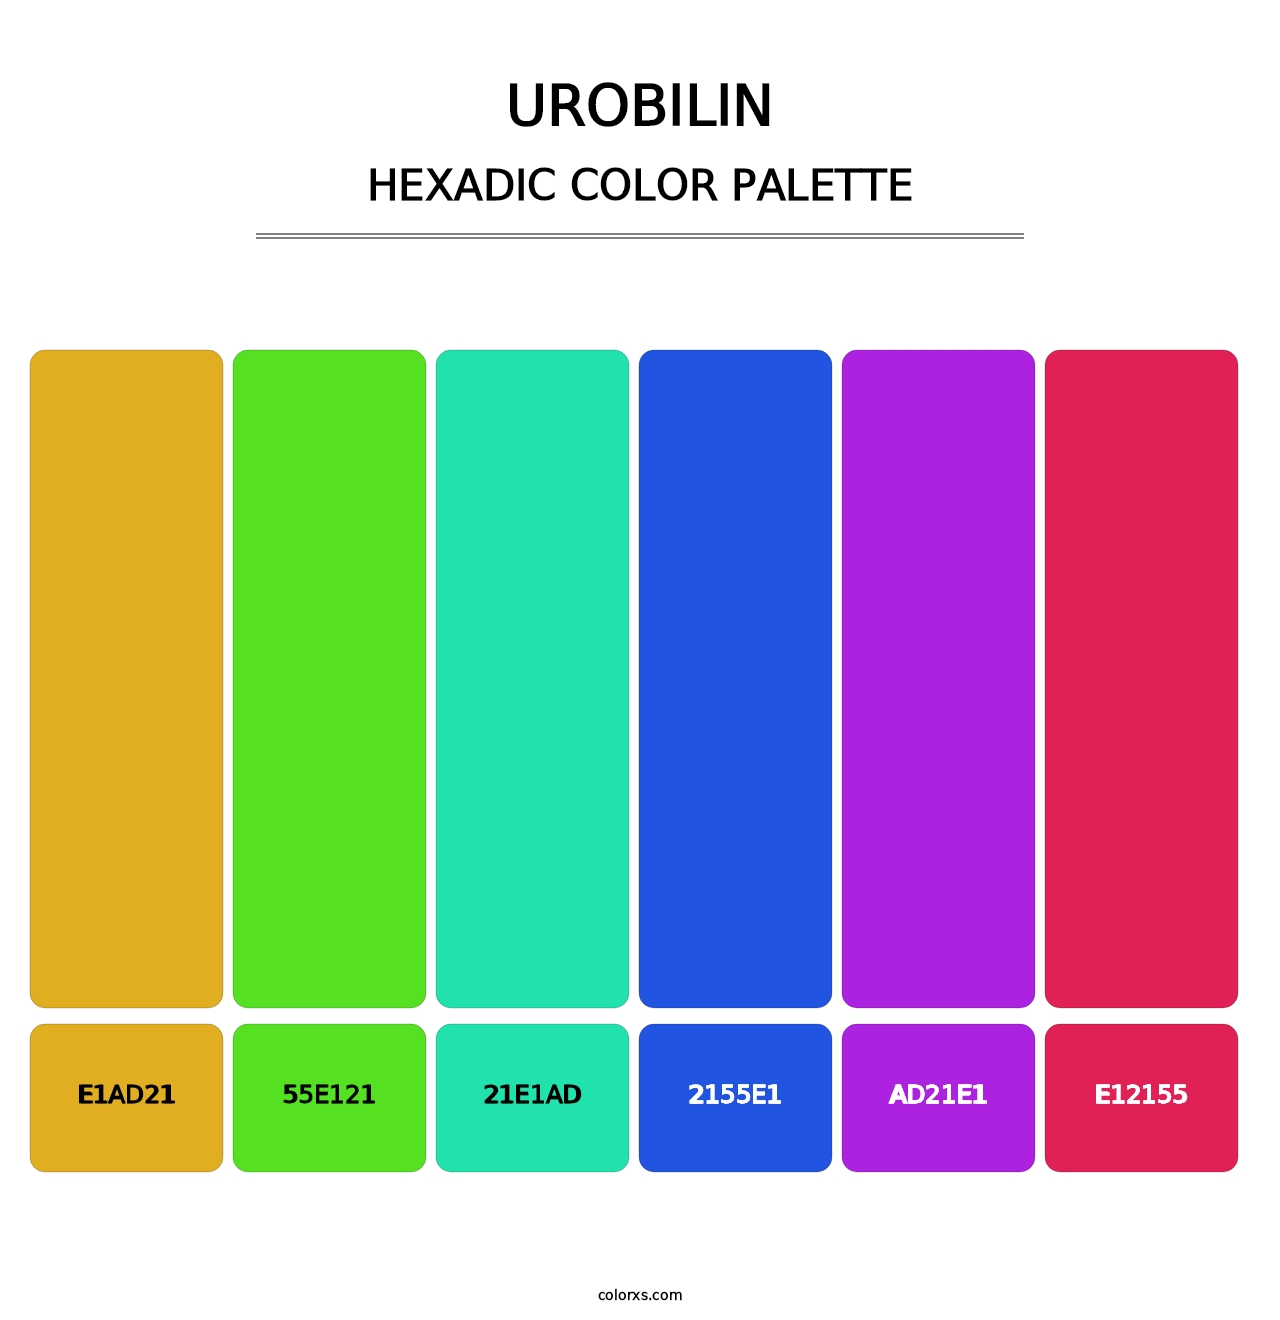 Urobilin - Hexadic Color Palette